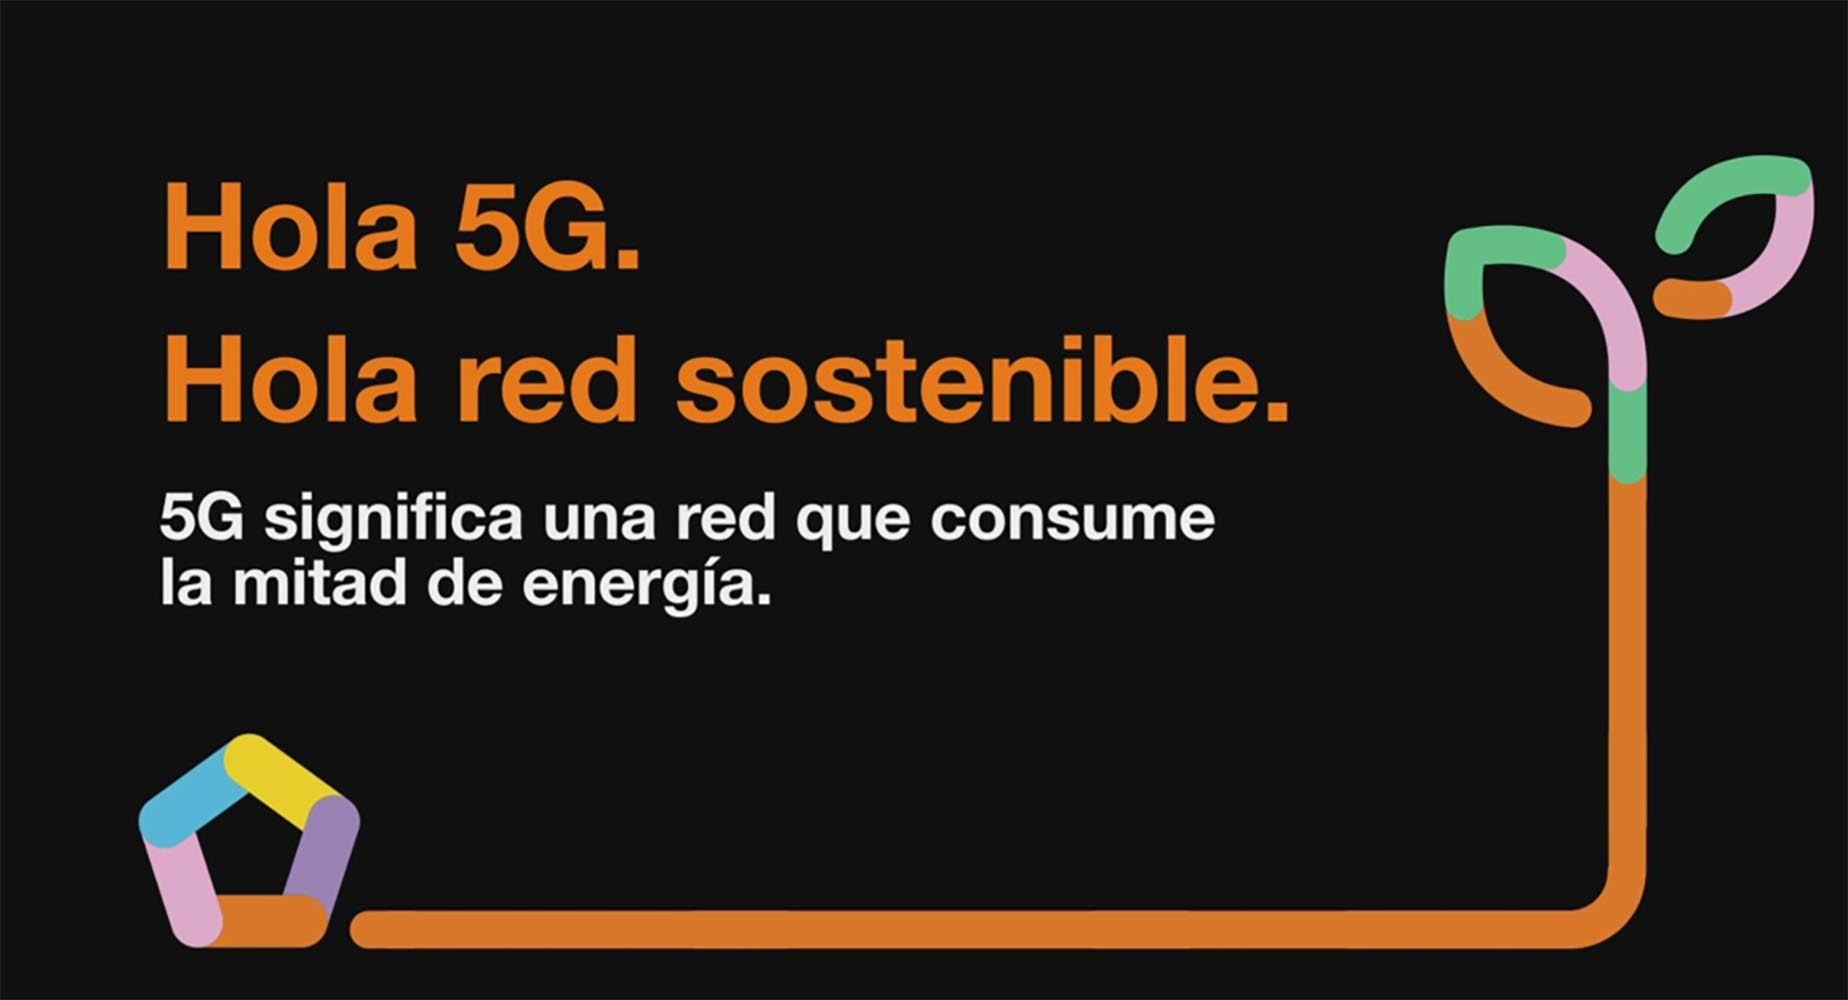 5G orange